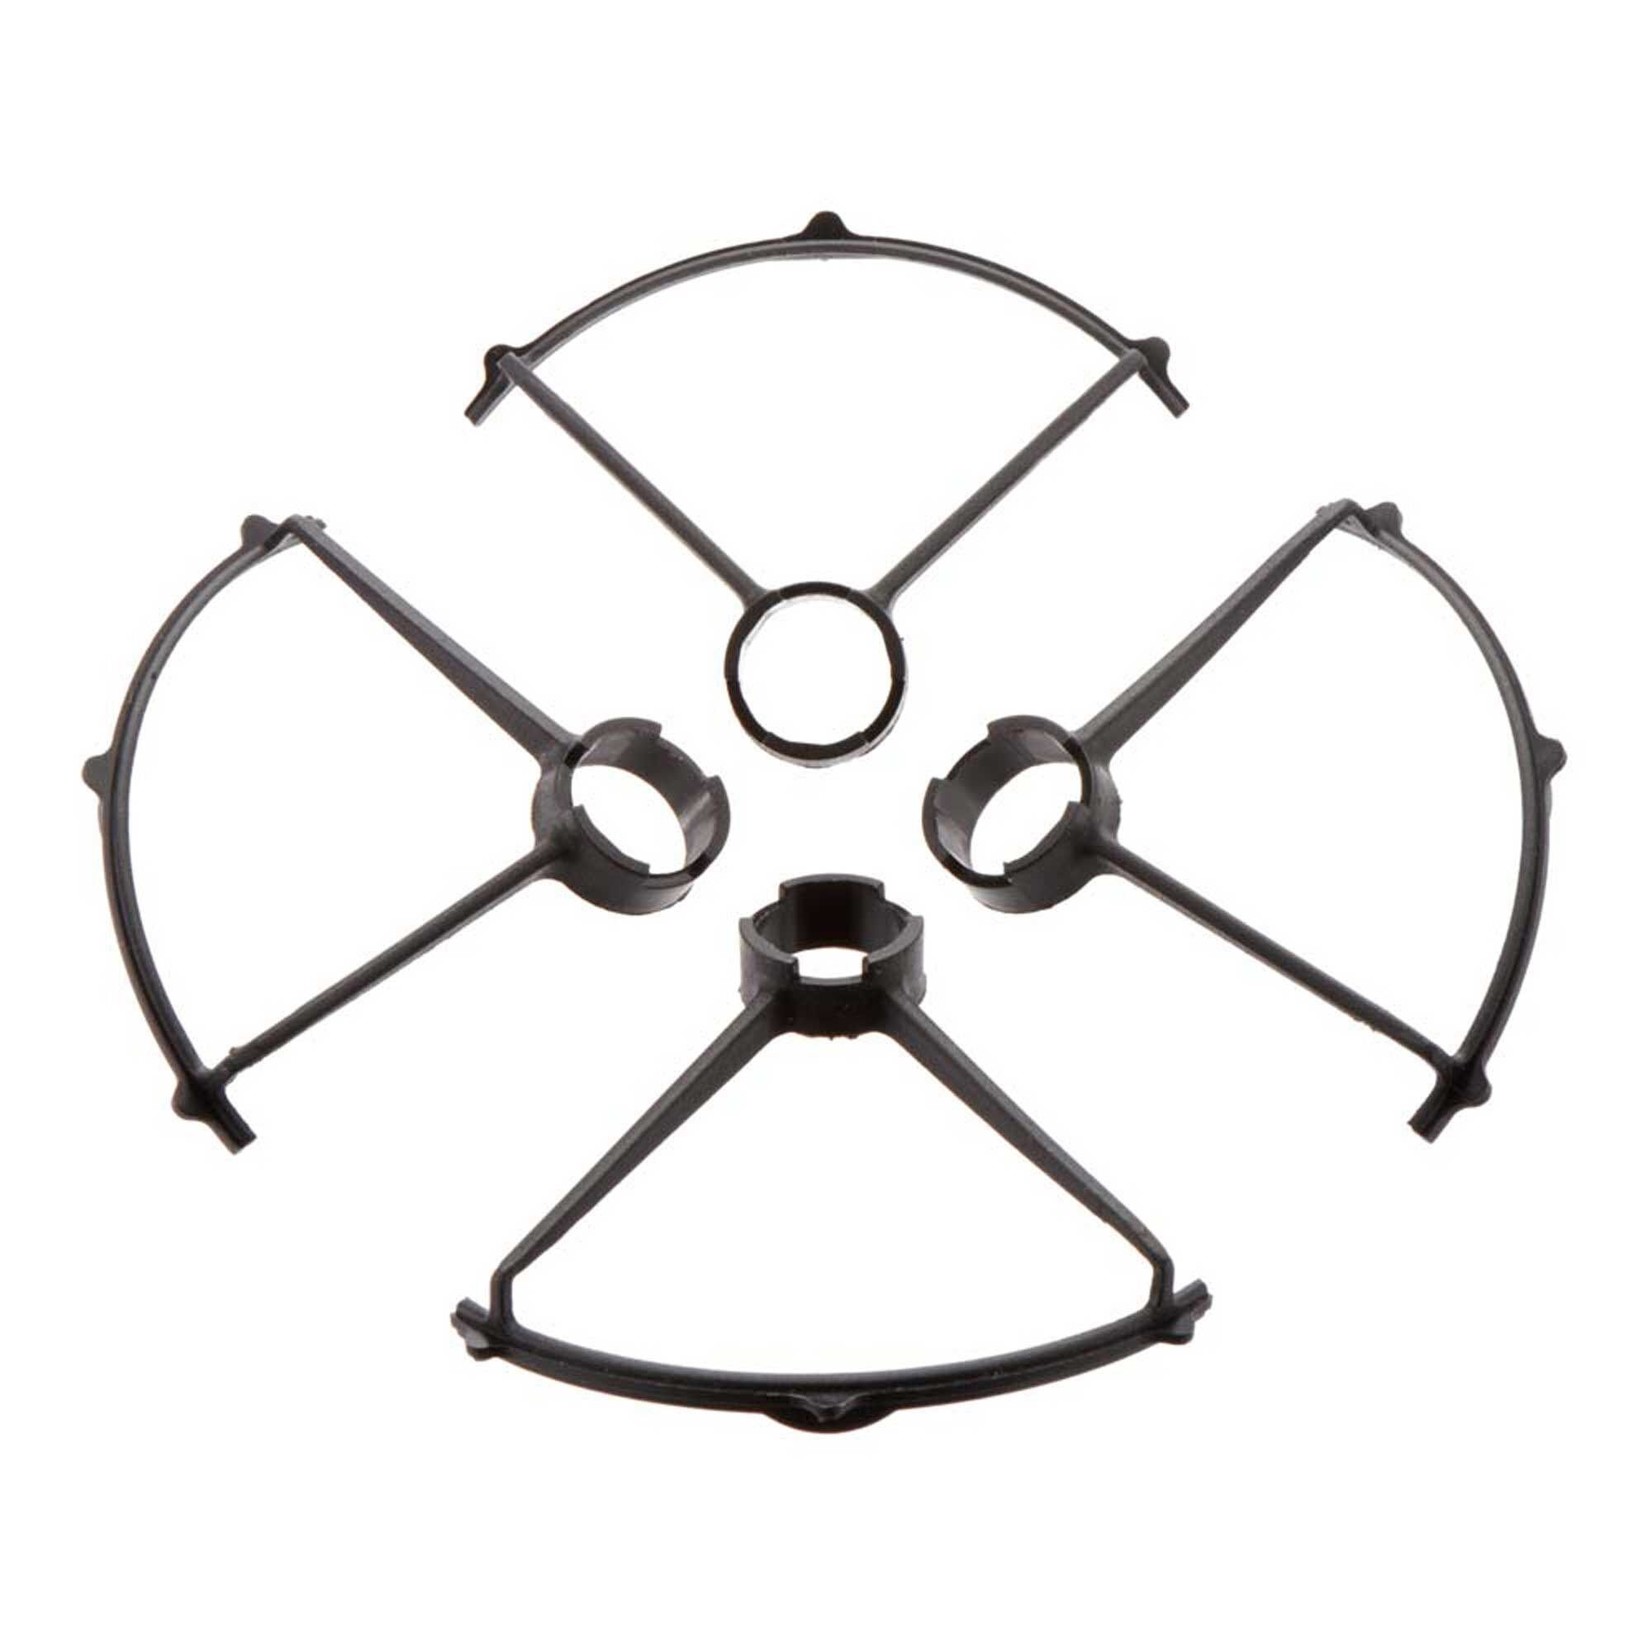 Dromida Prop Guard Set (4): Kodo Quadcopter